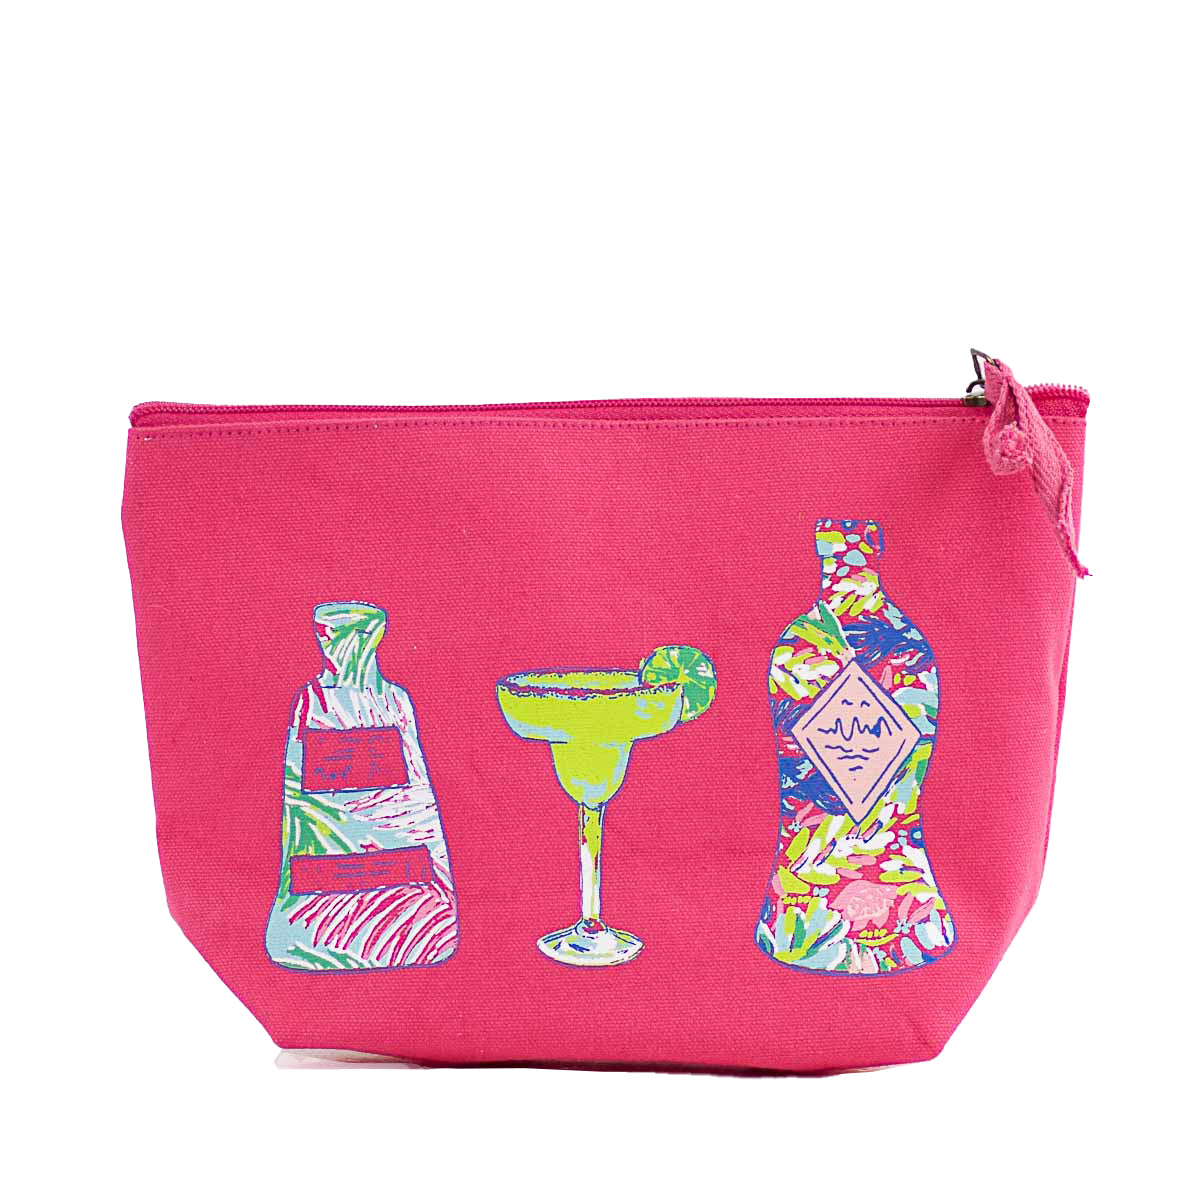 Tequila Sunrise Cosmetic Bag Hot Pink/Multi